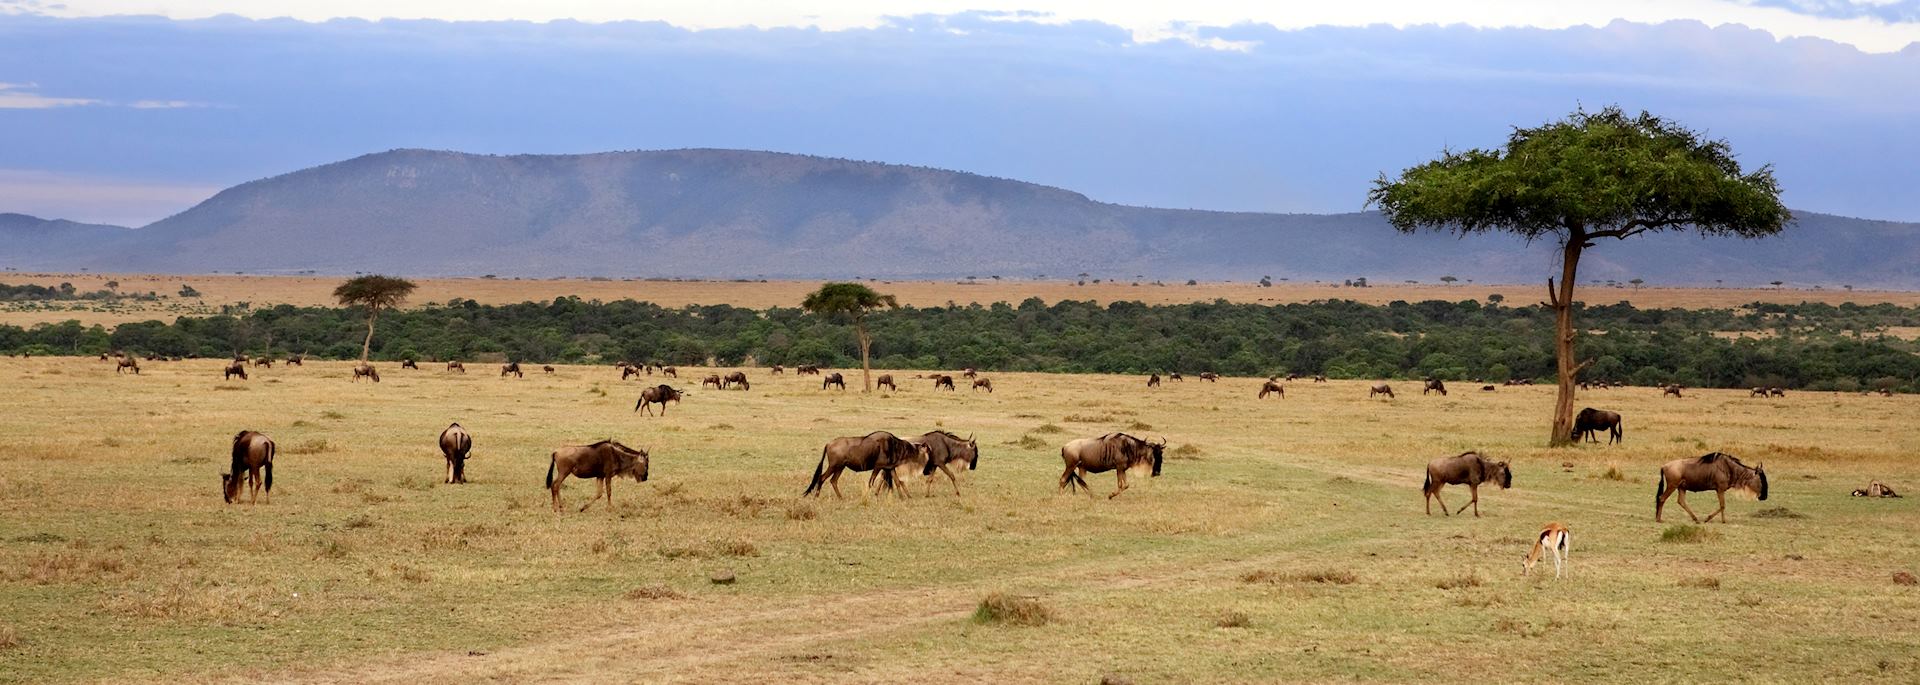 Wildebeest herd, Masai Mara